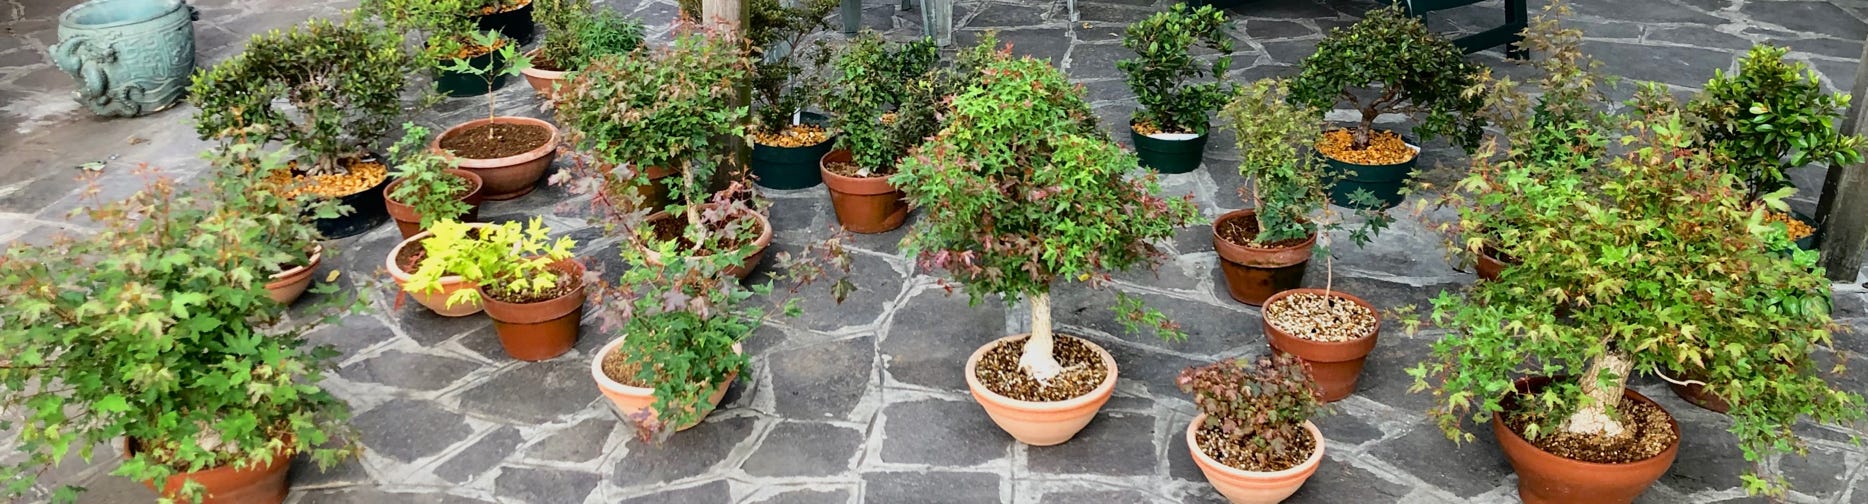 Acer truncatum Shantung maples Italy dwarf bonsai fire dragon